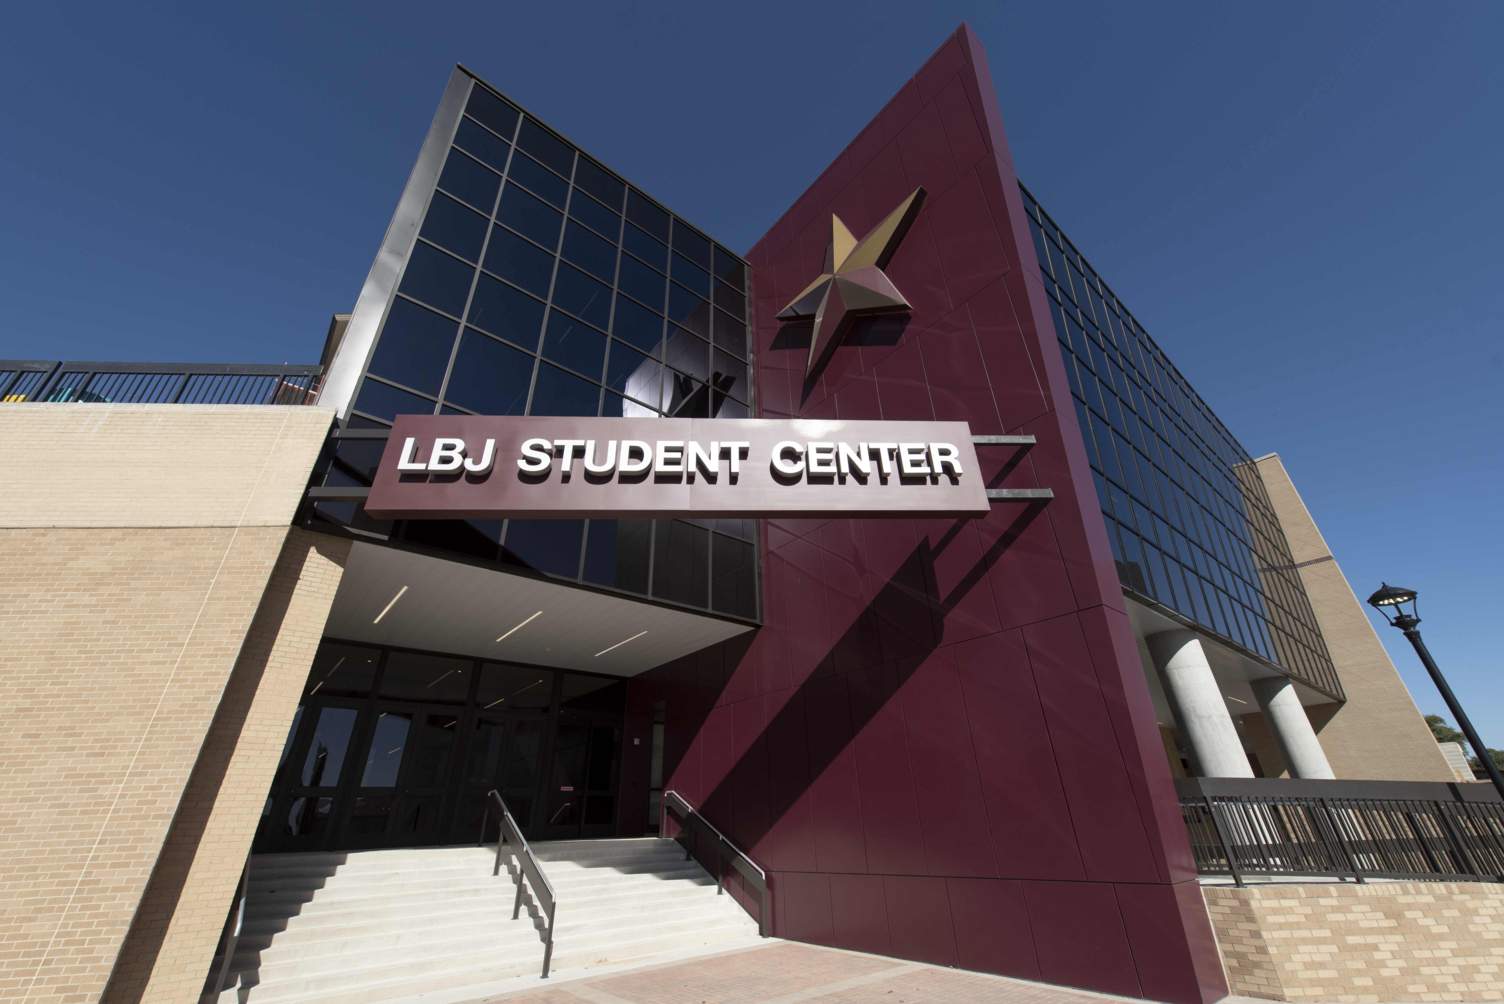 LBJ Student Center exterior